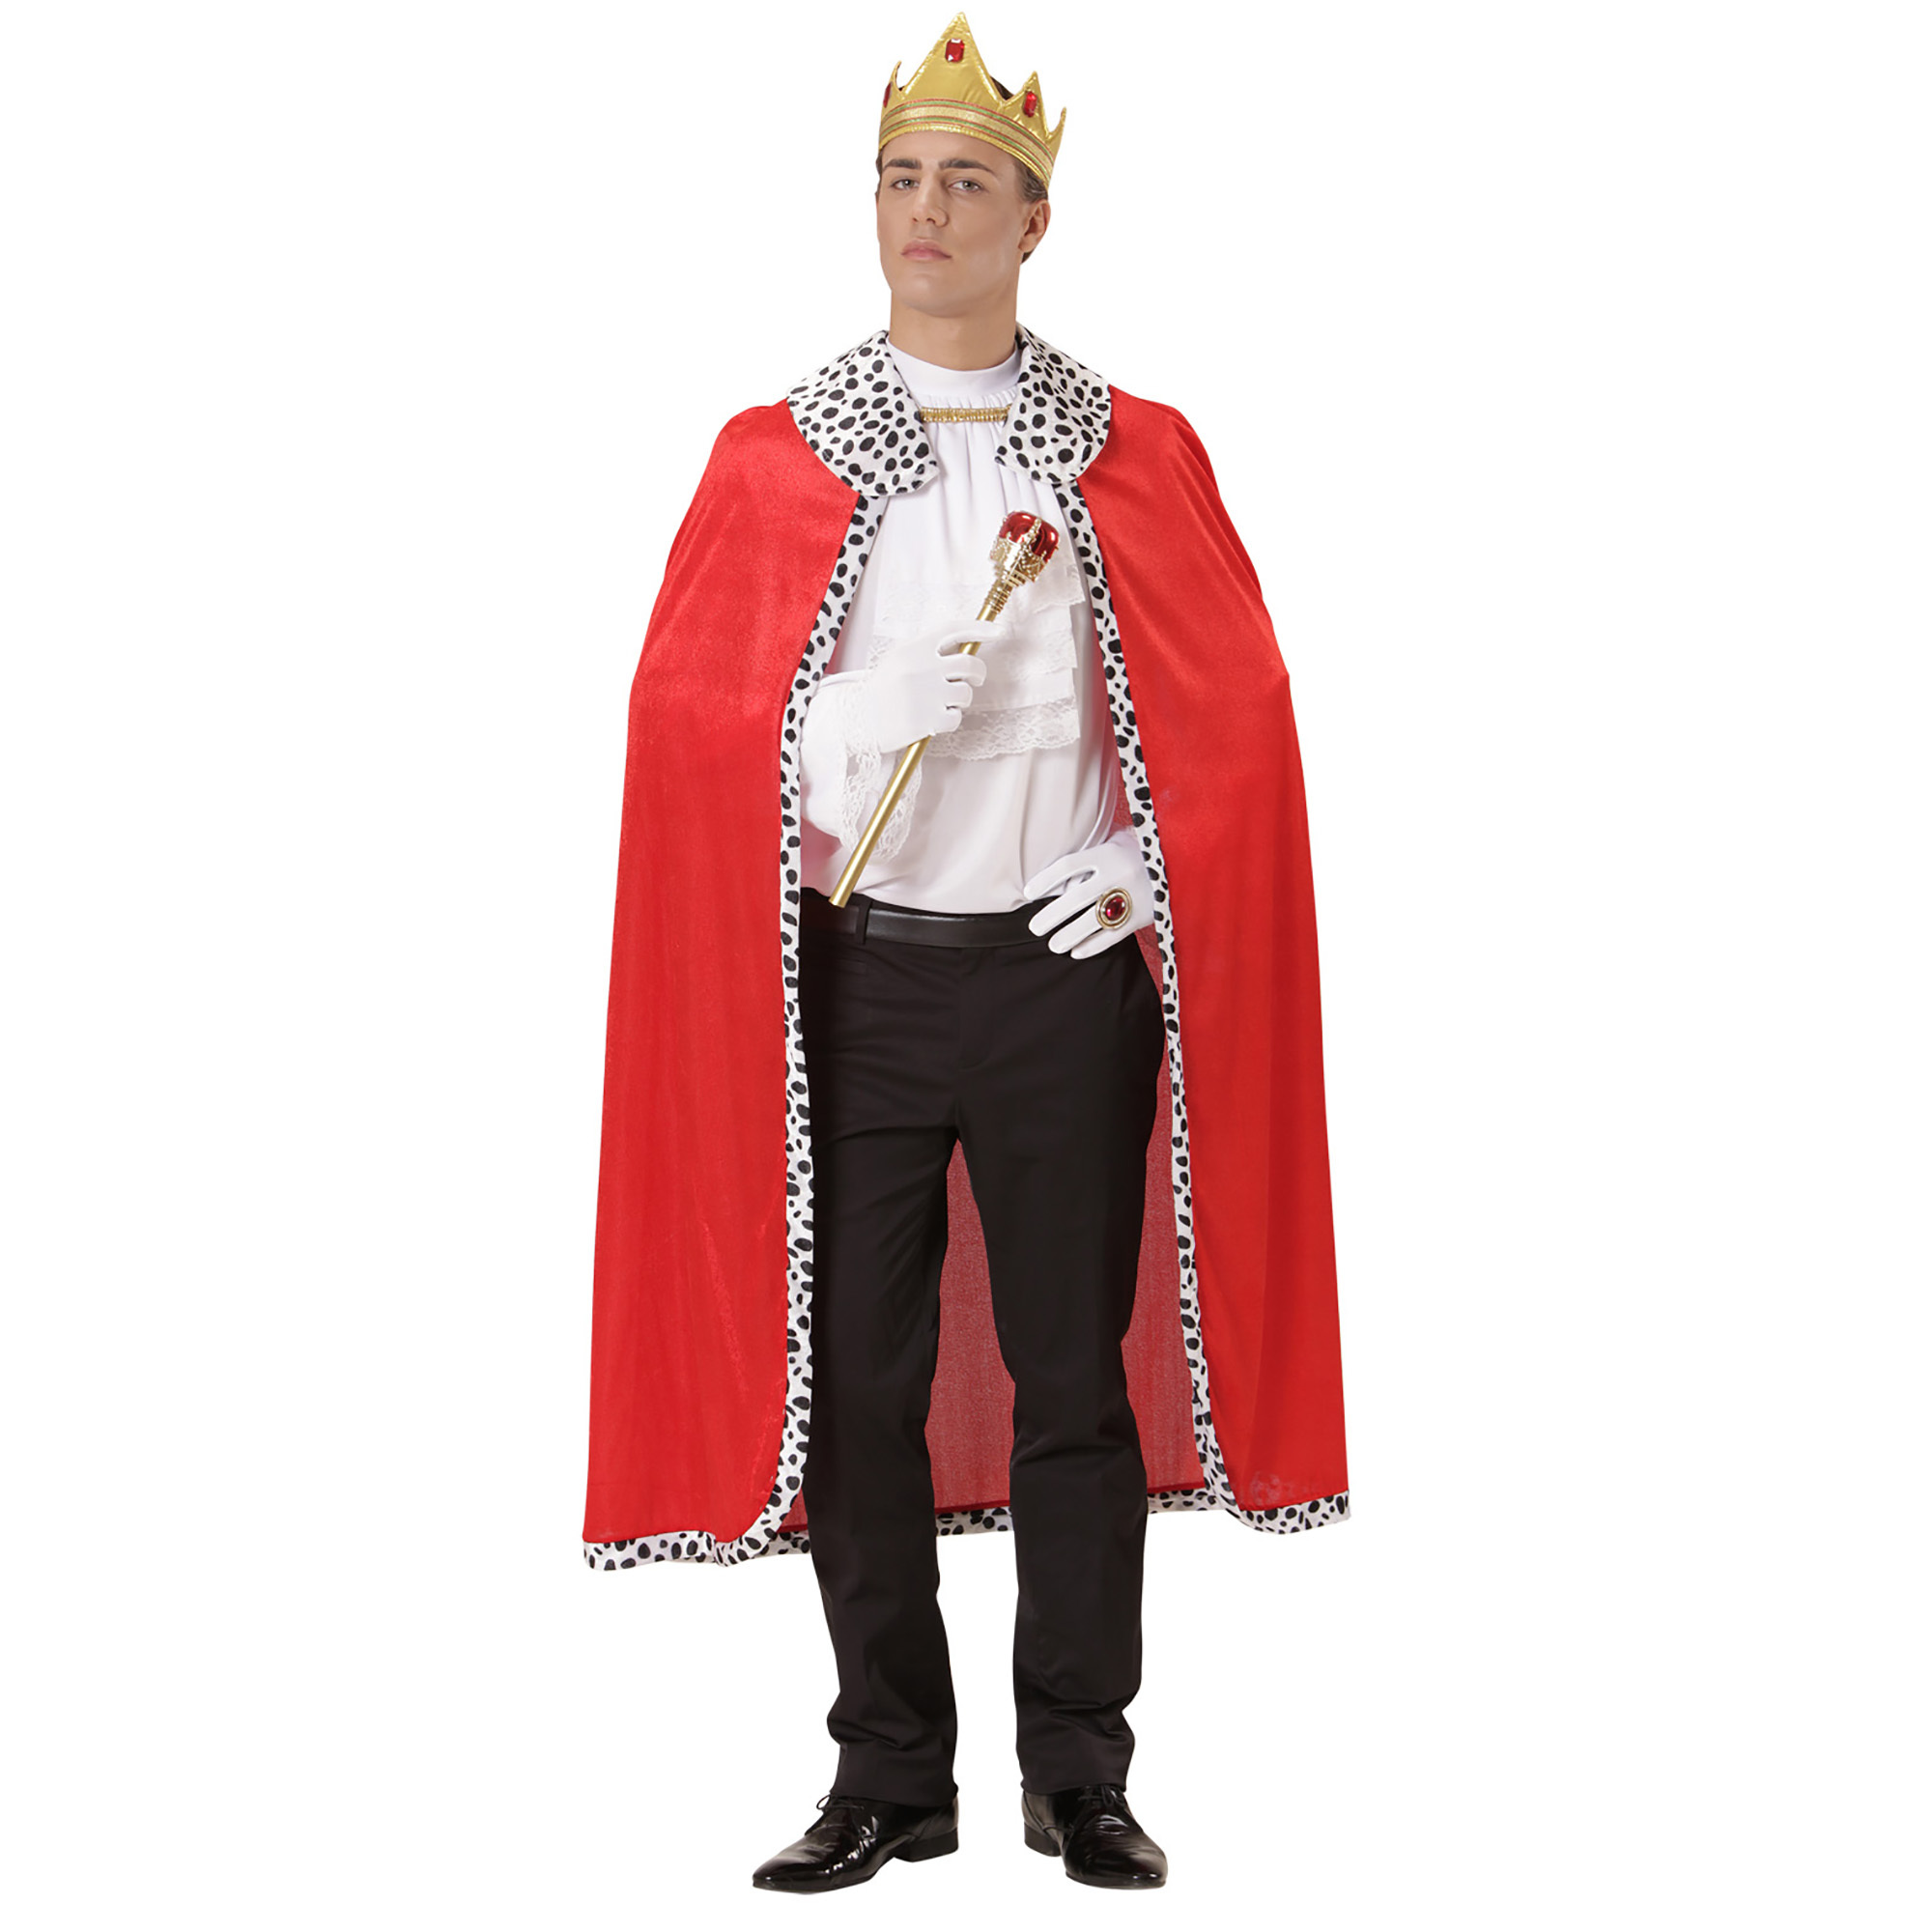 Koning mantel met kroon volwassen zijne hoogheid